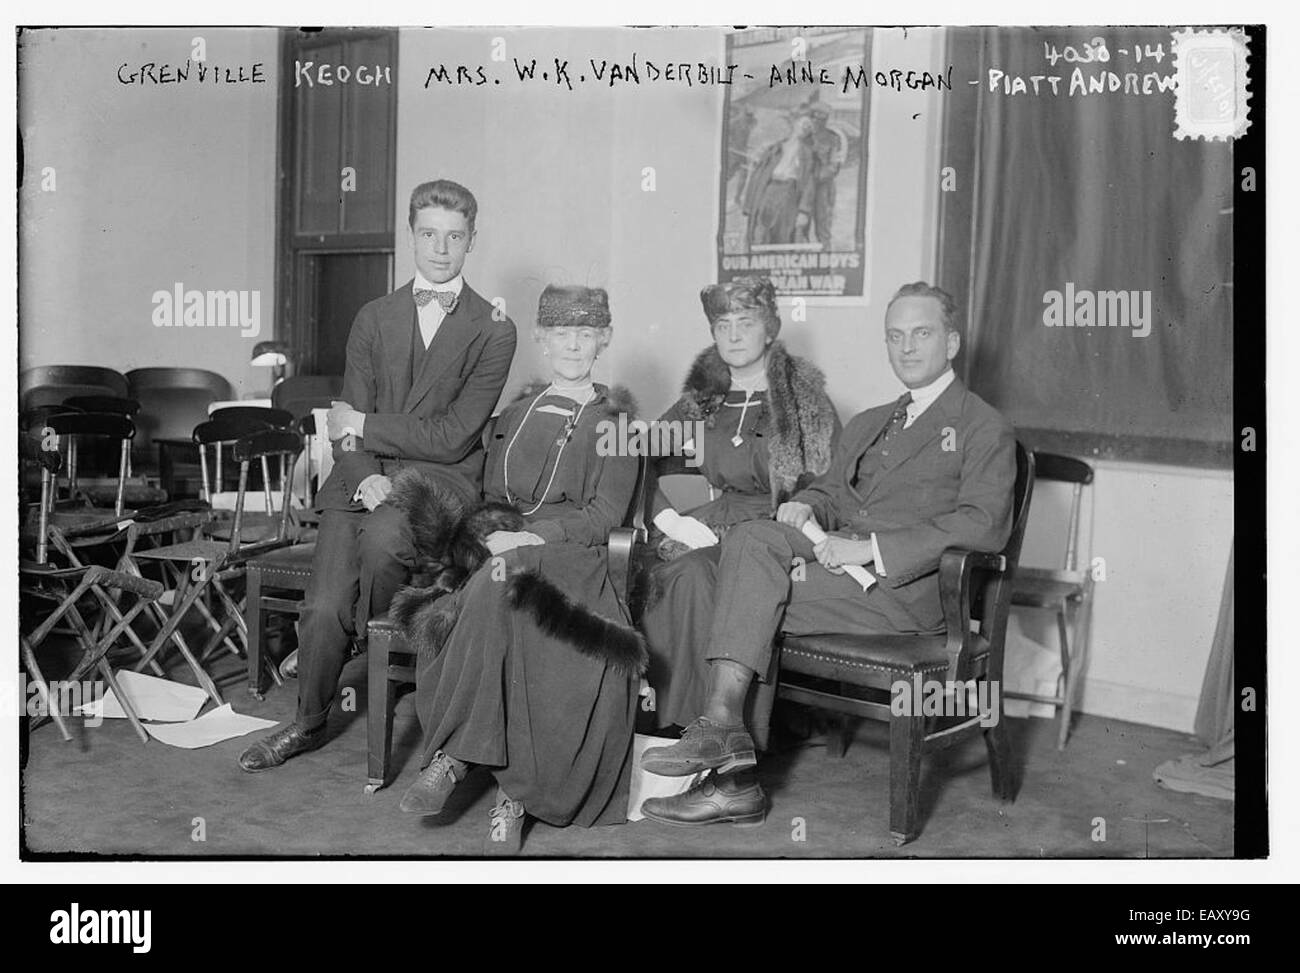 Grenville Keogh, MRs WK Vanderbilt, Anne Morgan, Piatt Andrew  152 Stock Photo